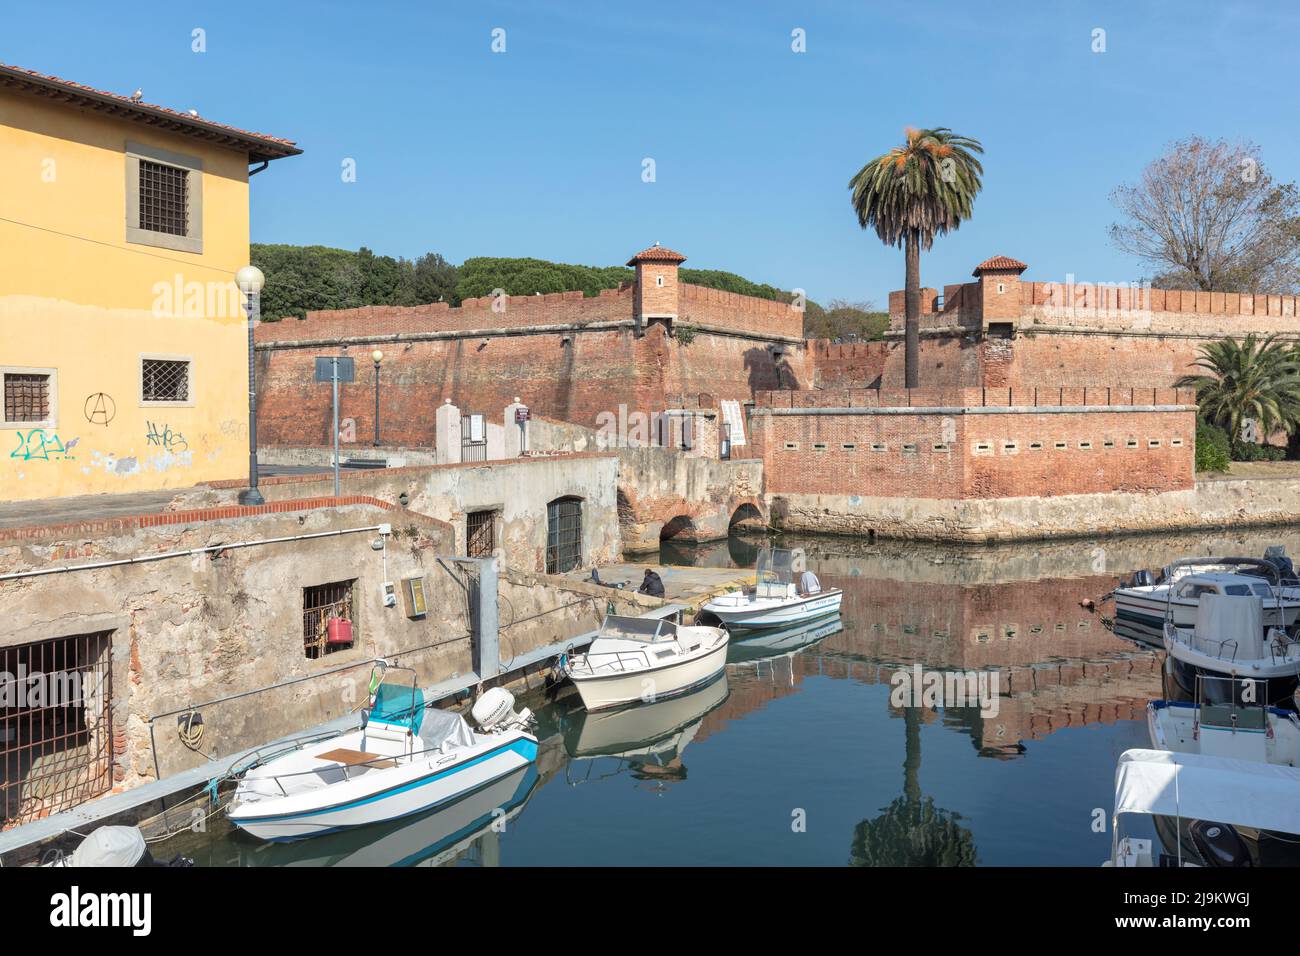 Fortezza Nuova, fortress completed in 1604, in Scali della Fortezza Nuova, surrounded by boats in historic canal, Livorno, Tuscany, Italy Stock Photo